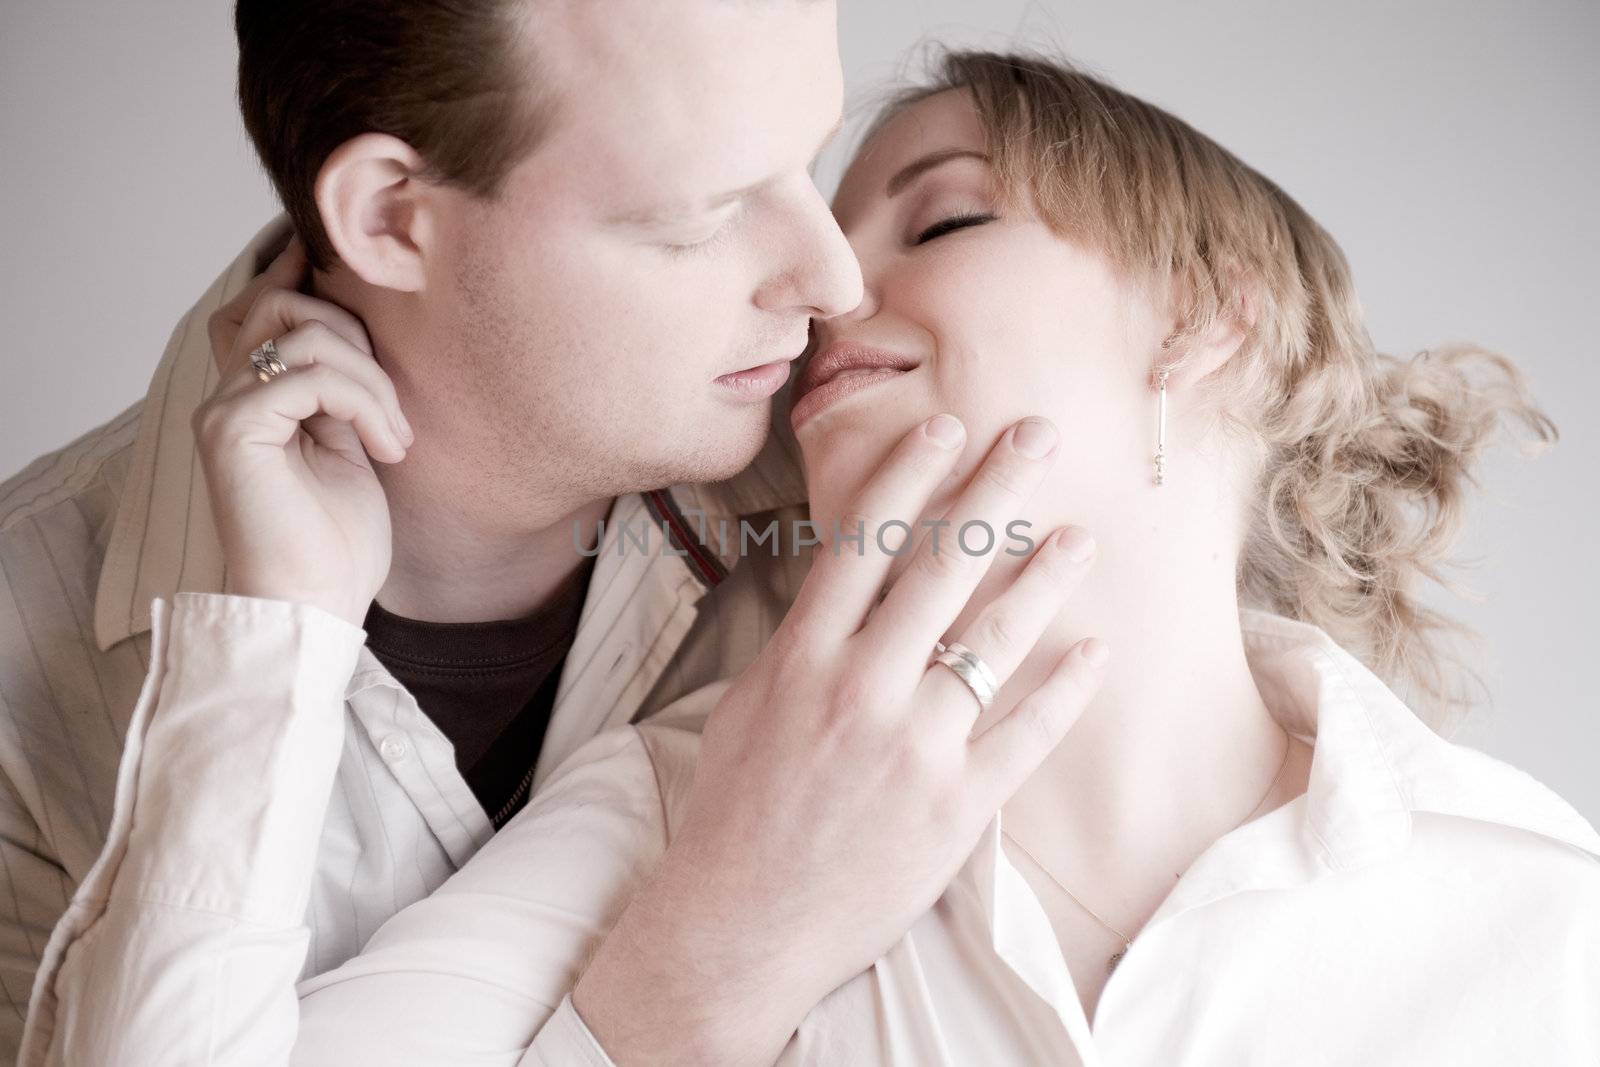 Studio portrait of a young amorous couple kissing